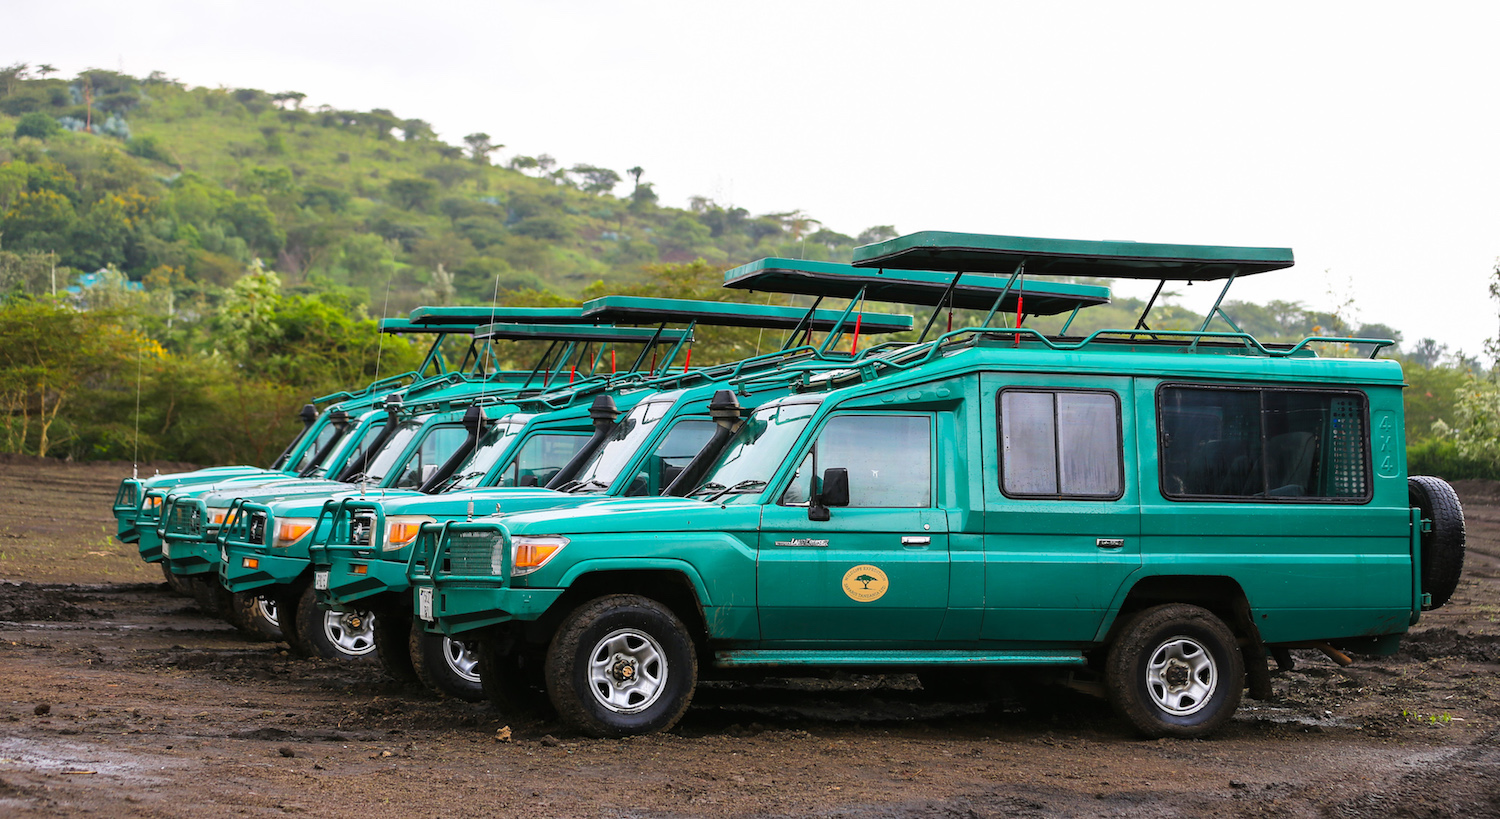 Tanzania Safari Vehicle - 4X4 Land Cruiser